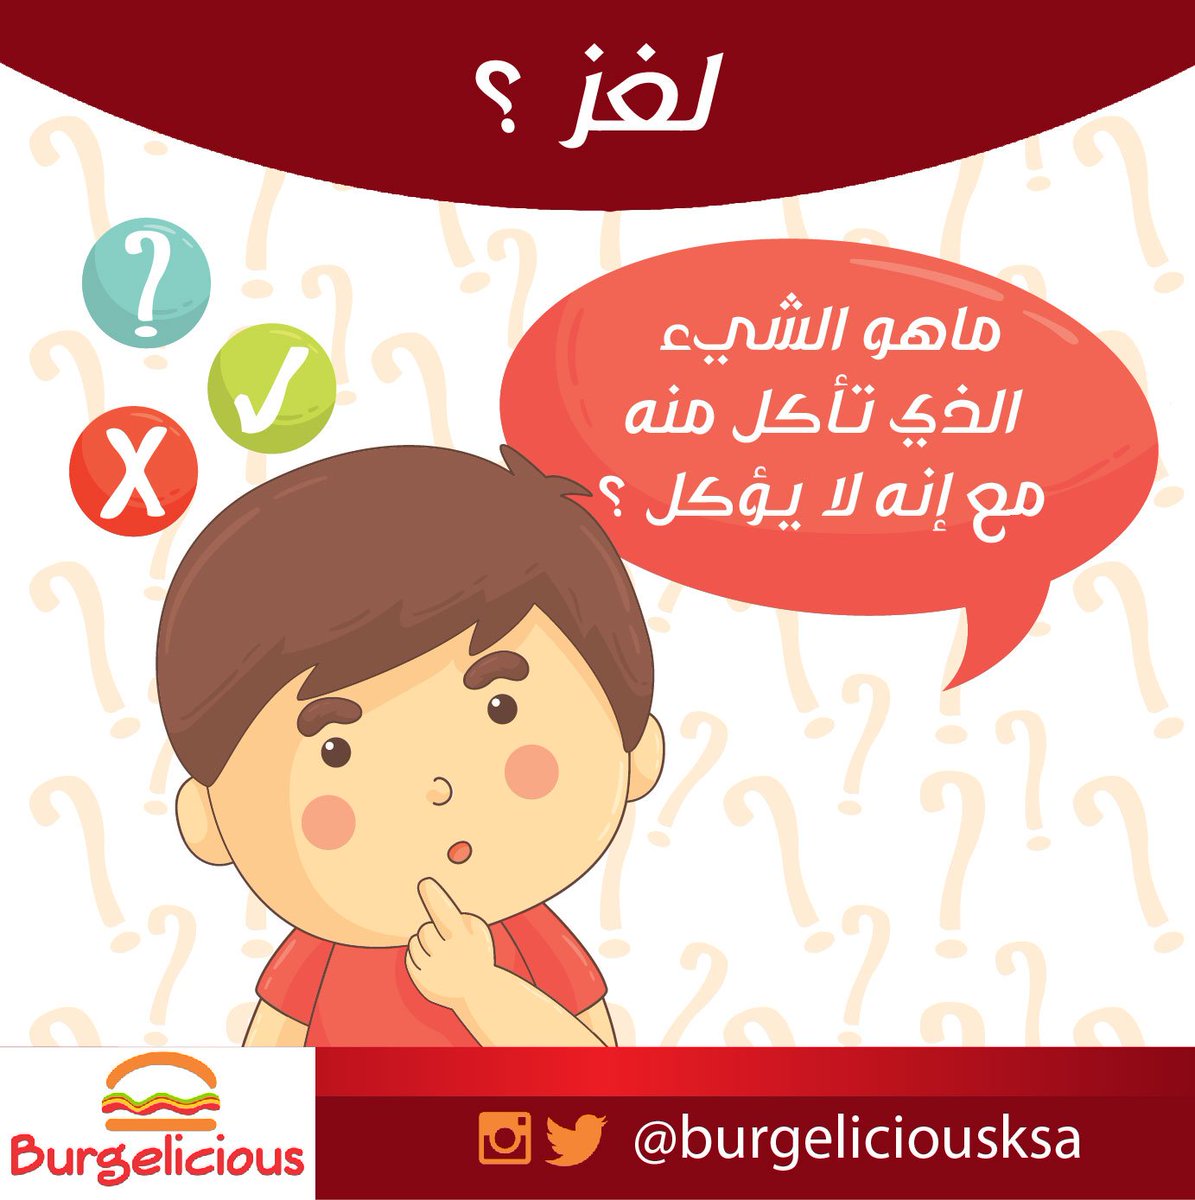 Burgelicious On Twitter ايش هو الشي اللي تاكل منه مع انه لايؤكل